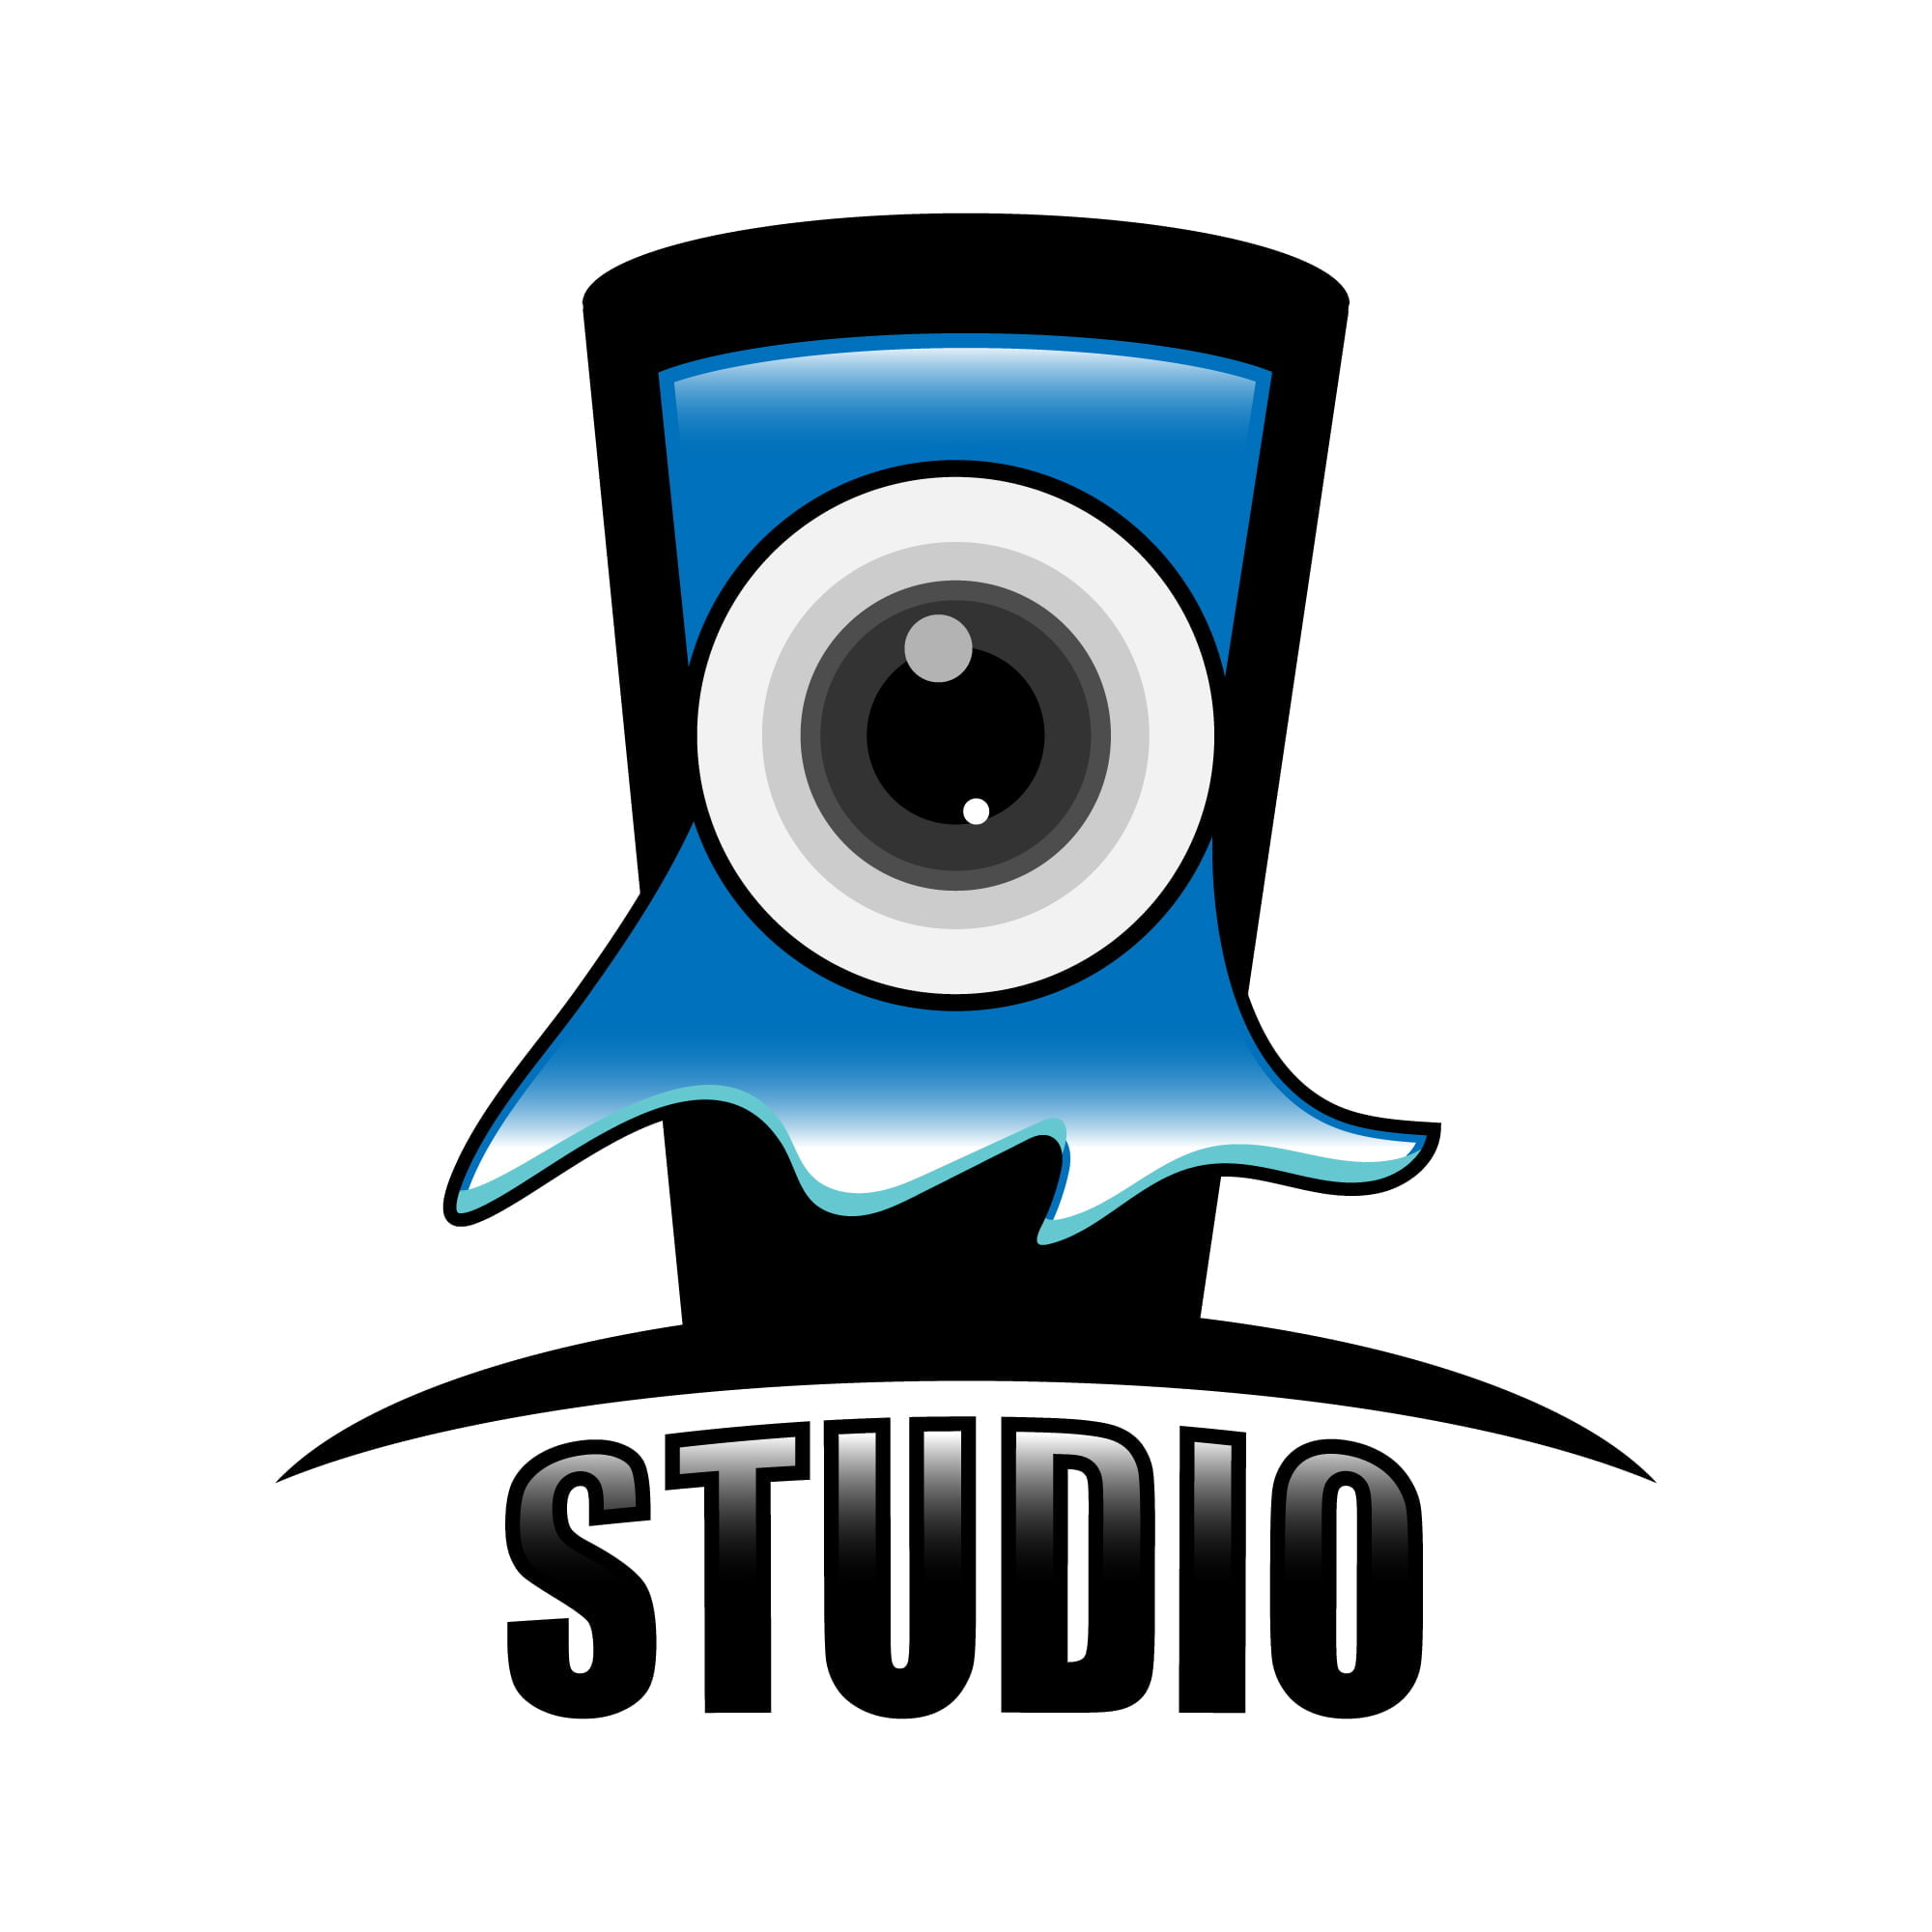 graphic design studio youtube